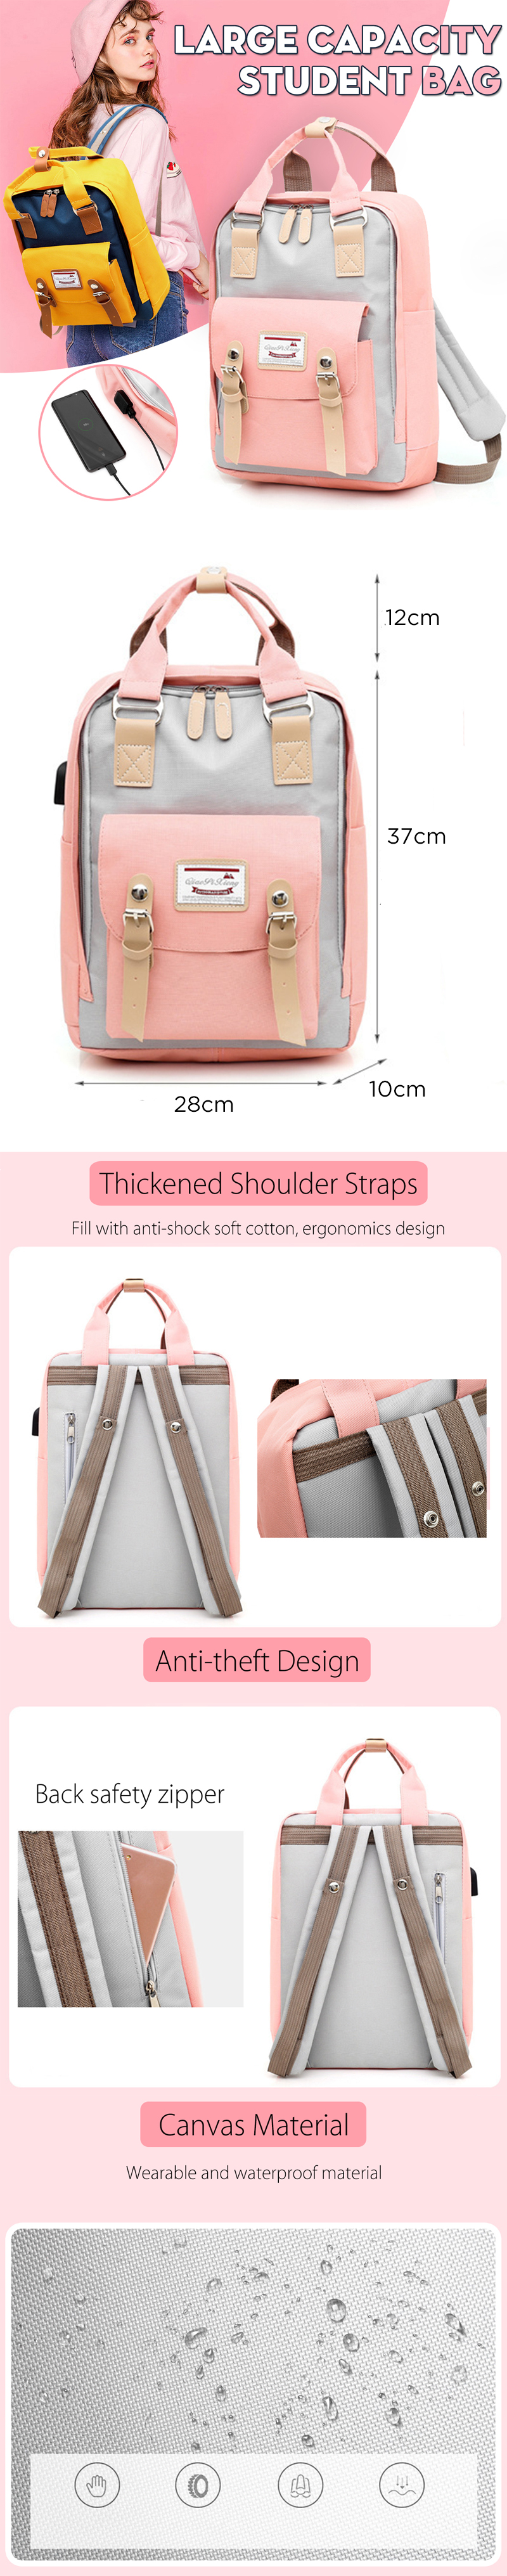 USB-Backpack-Student-School-Bag-Waterproof-Shoulder-Bag-Camping-Travel-1566078-1